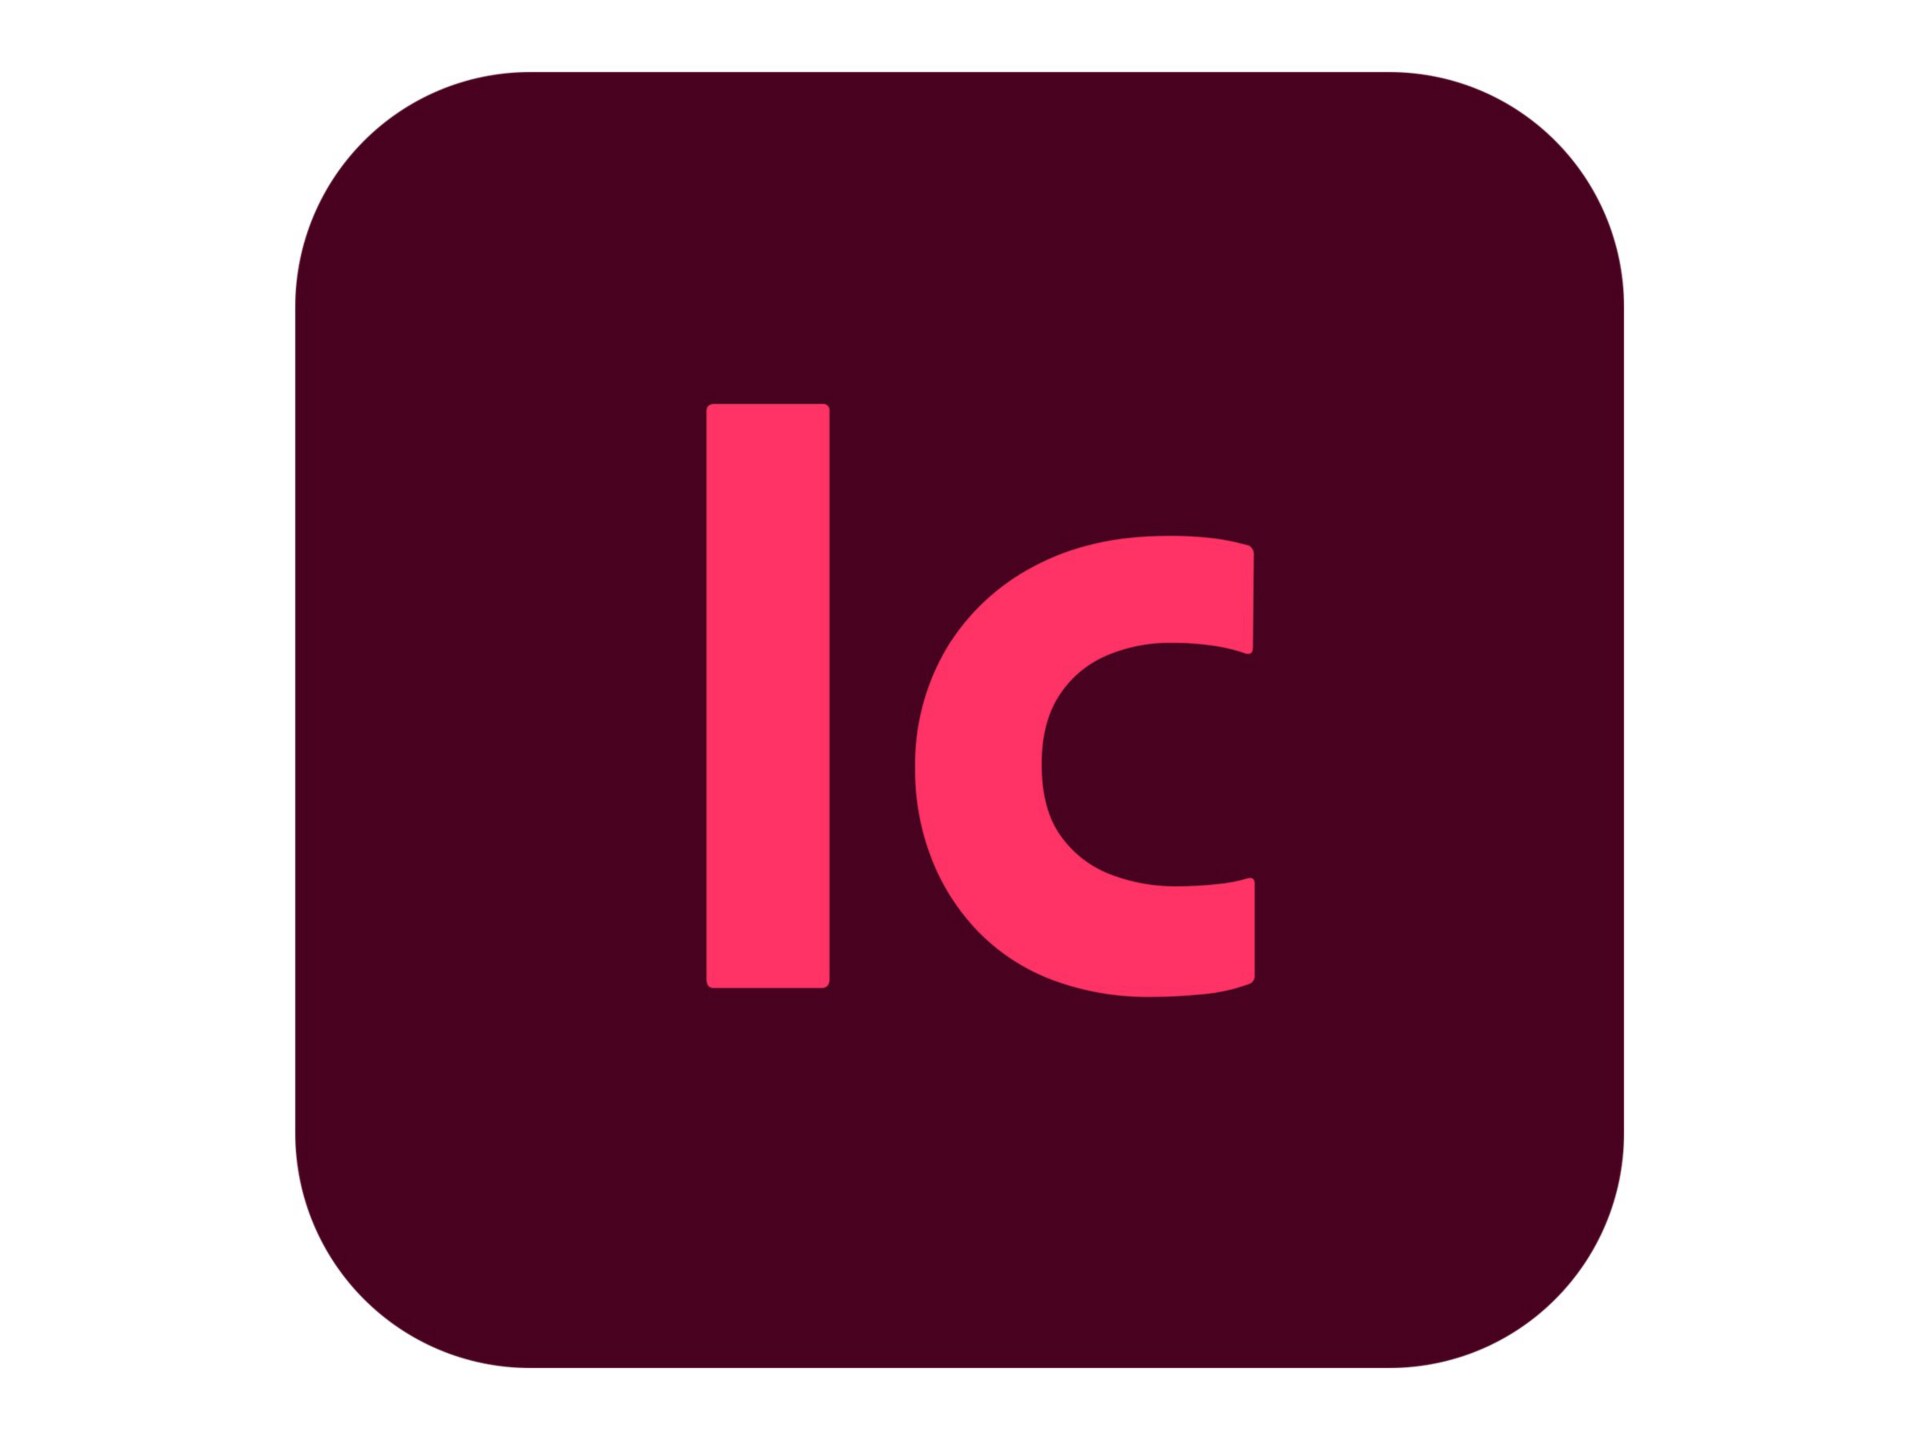 Adobe InCopy CC for Enterprise - Subscription New (6 months) - 1 named user